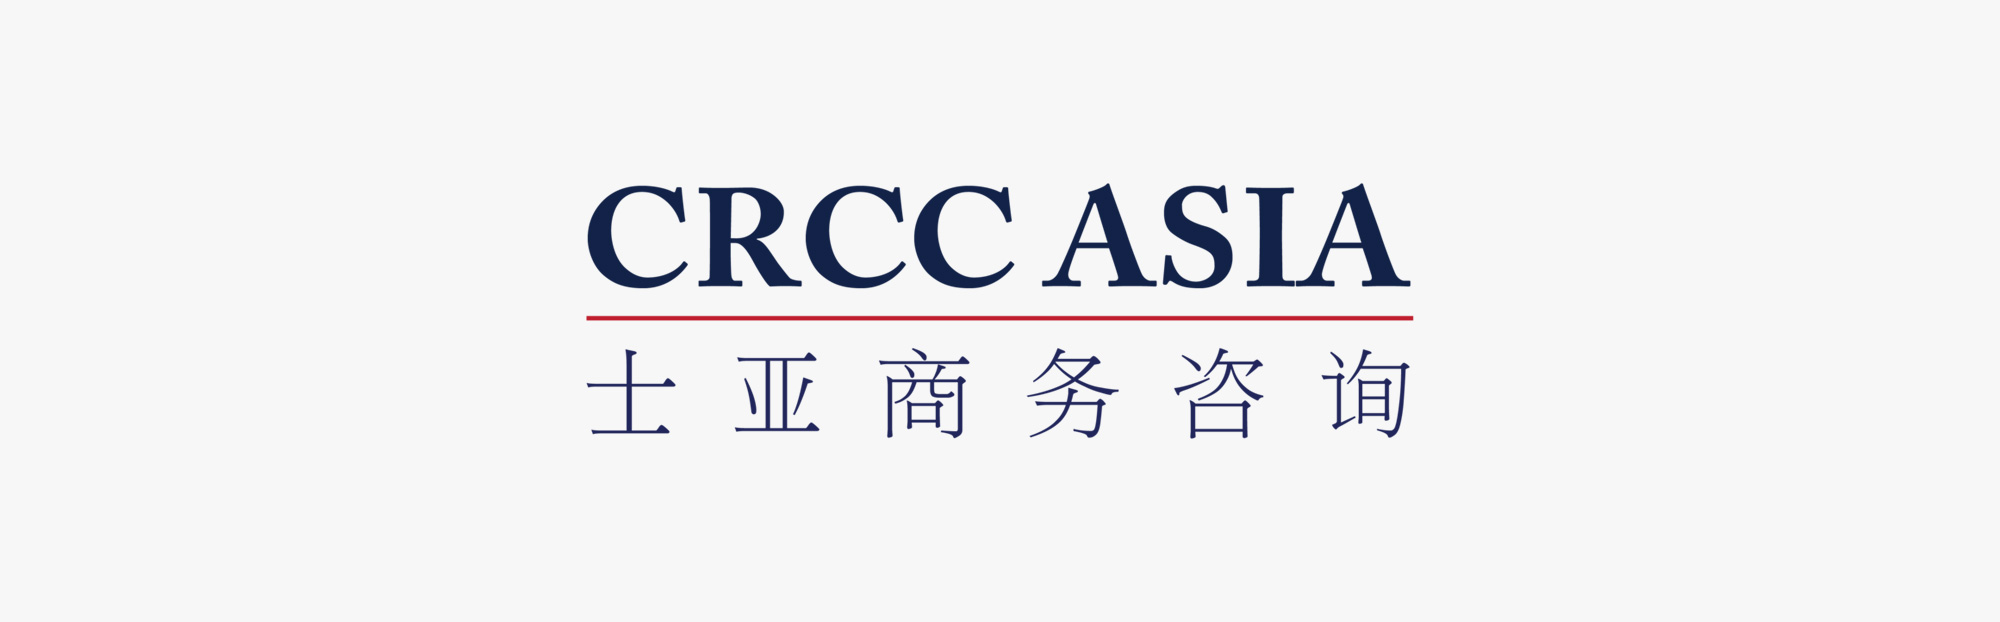 CRCC_Asia-BEFORE